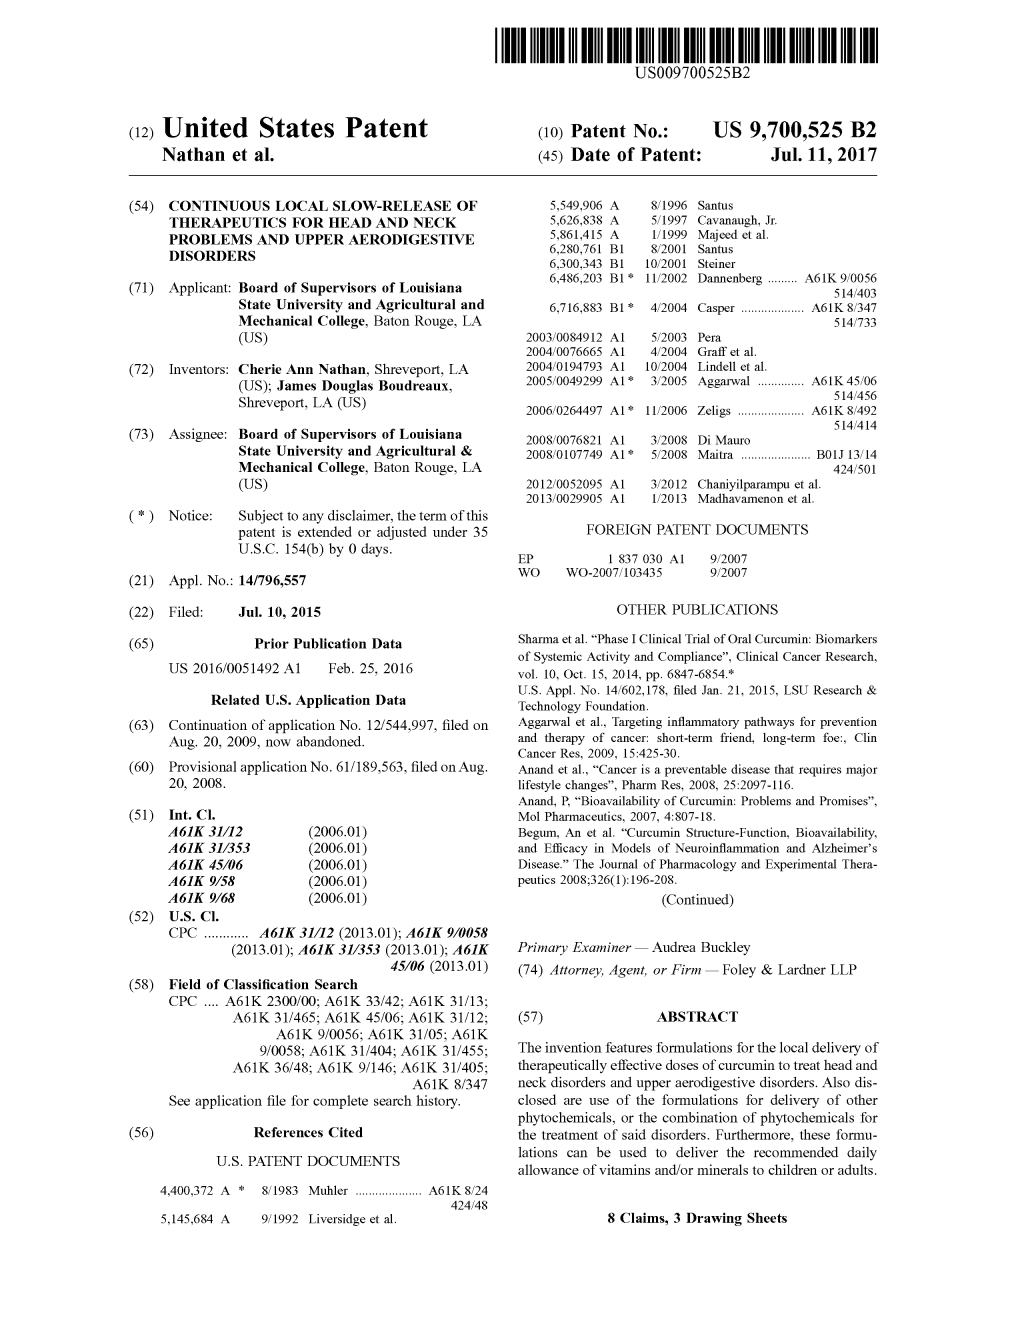 United States Patent (10) Patent No.: US 9,700,525 B2 Nathan Et Al